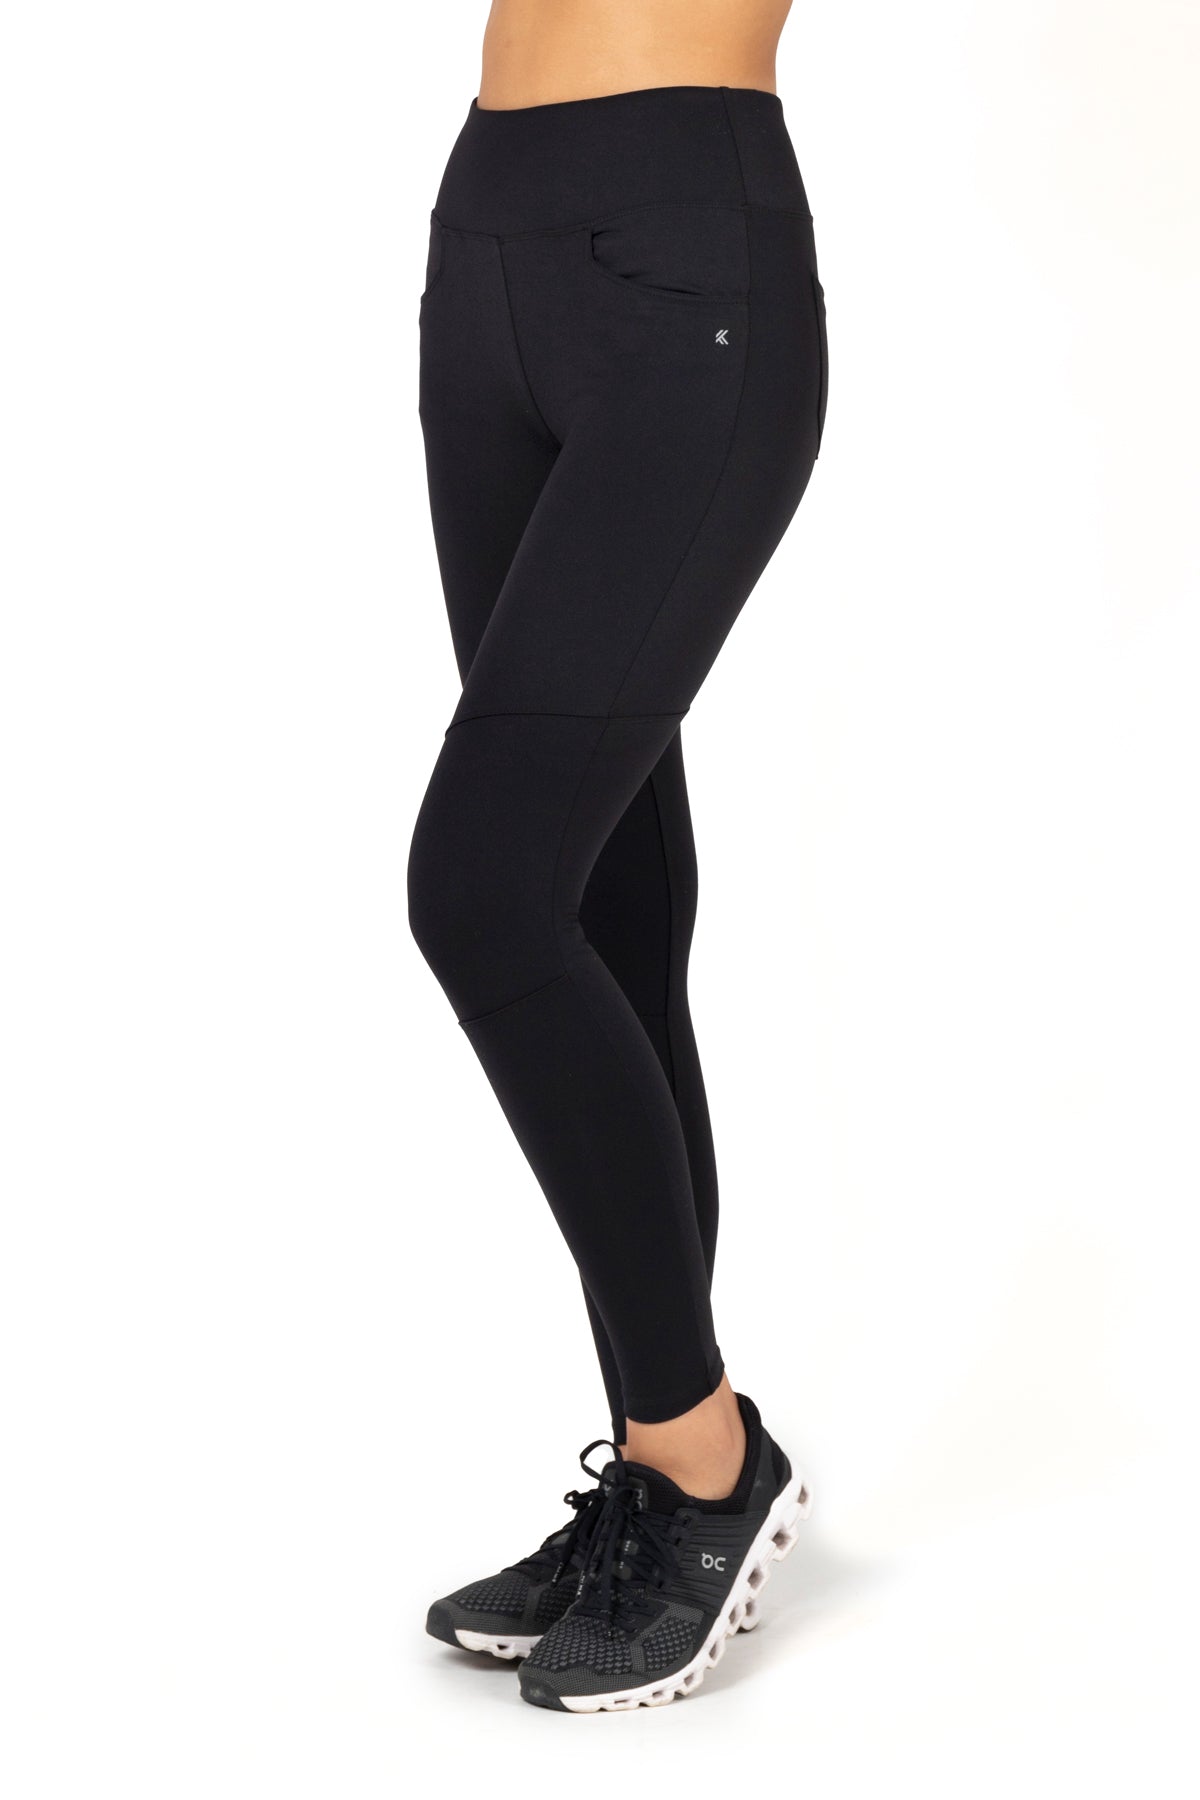 Axolotl Sea Women's Yoga Pants High Waist Leggings with Pockets Gym Workout  Tights